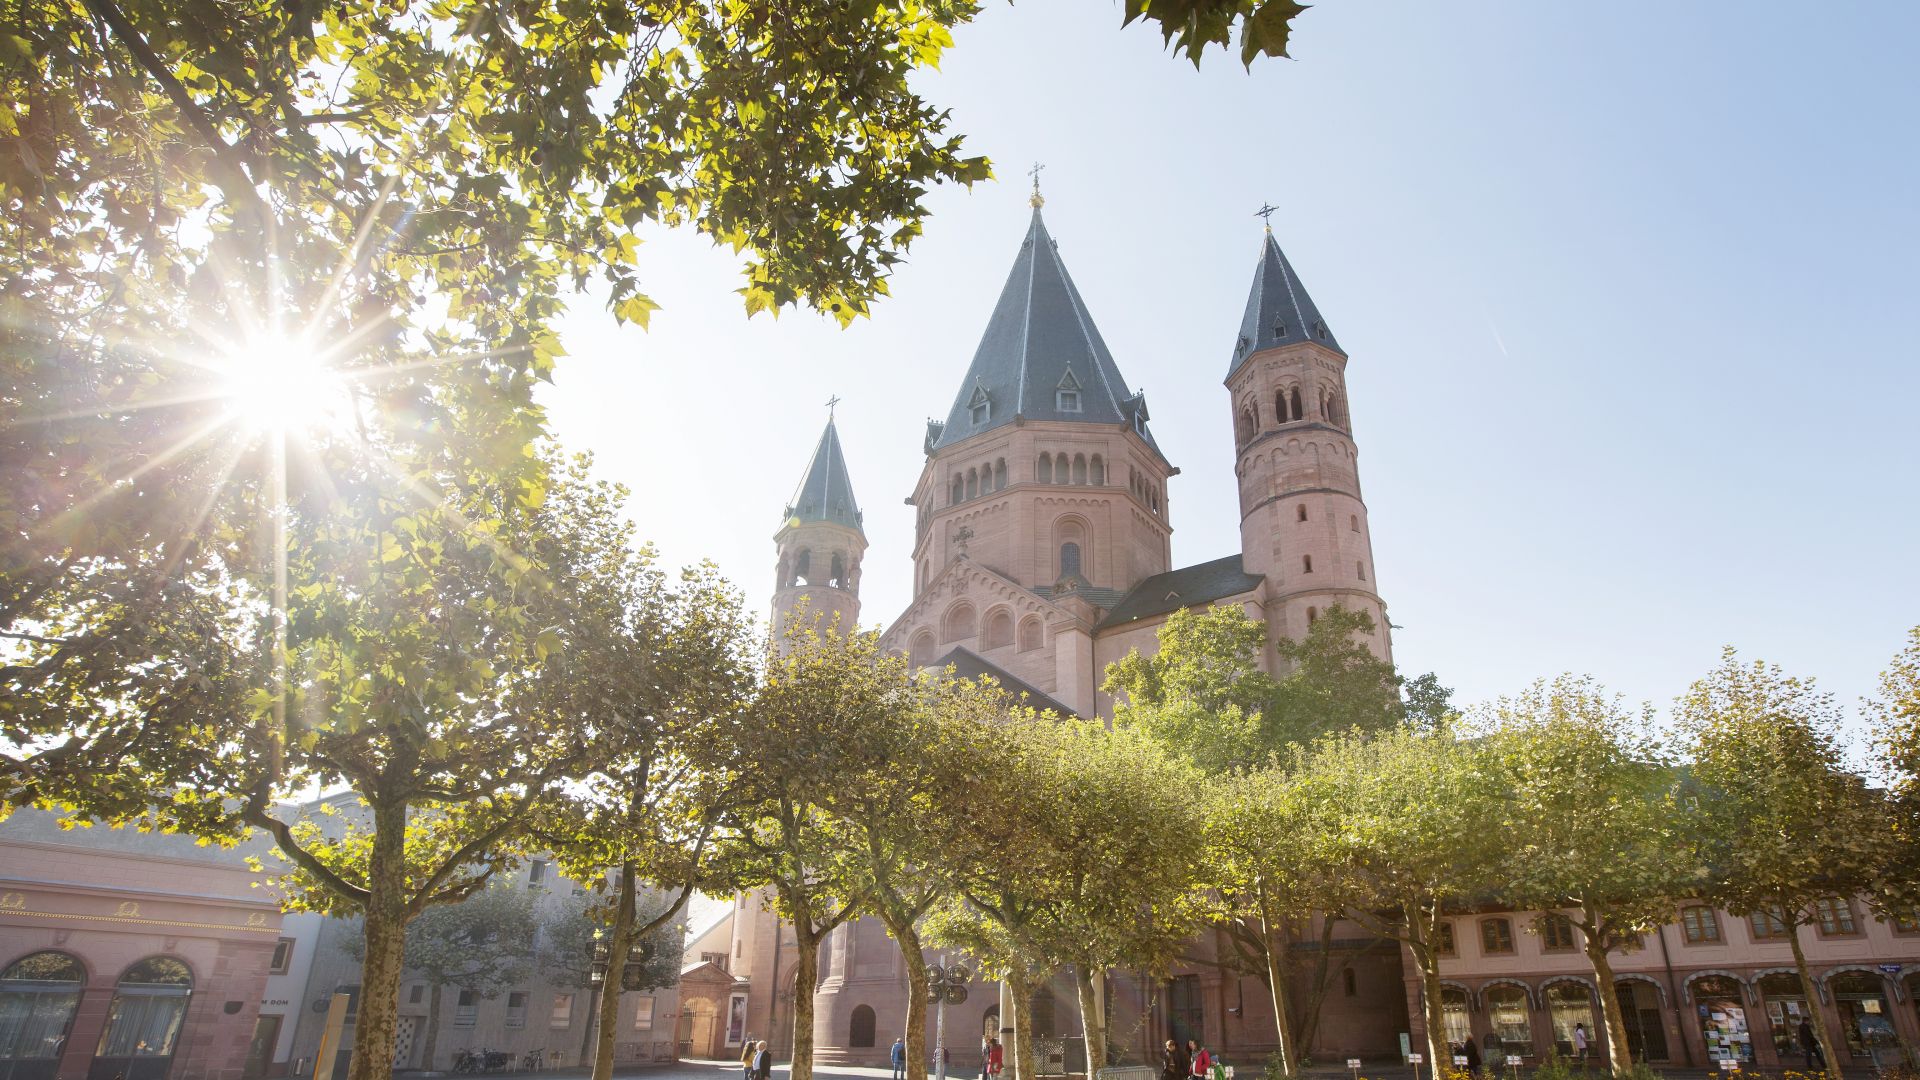 Mainz: Overlooking Mainz Cathedral